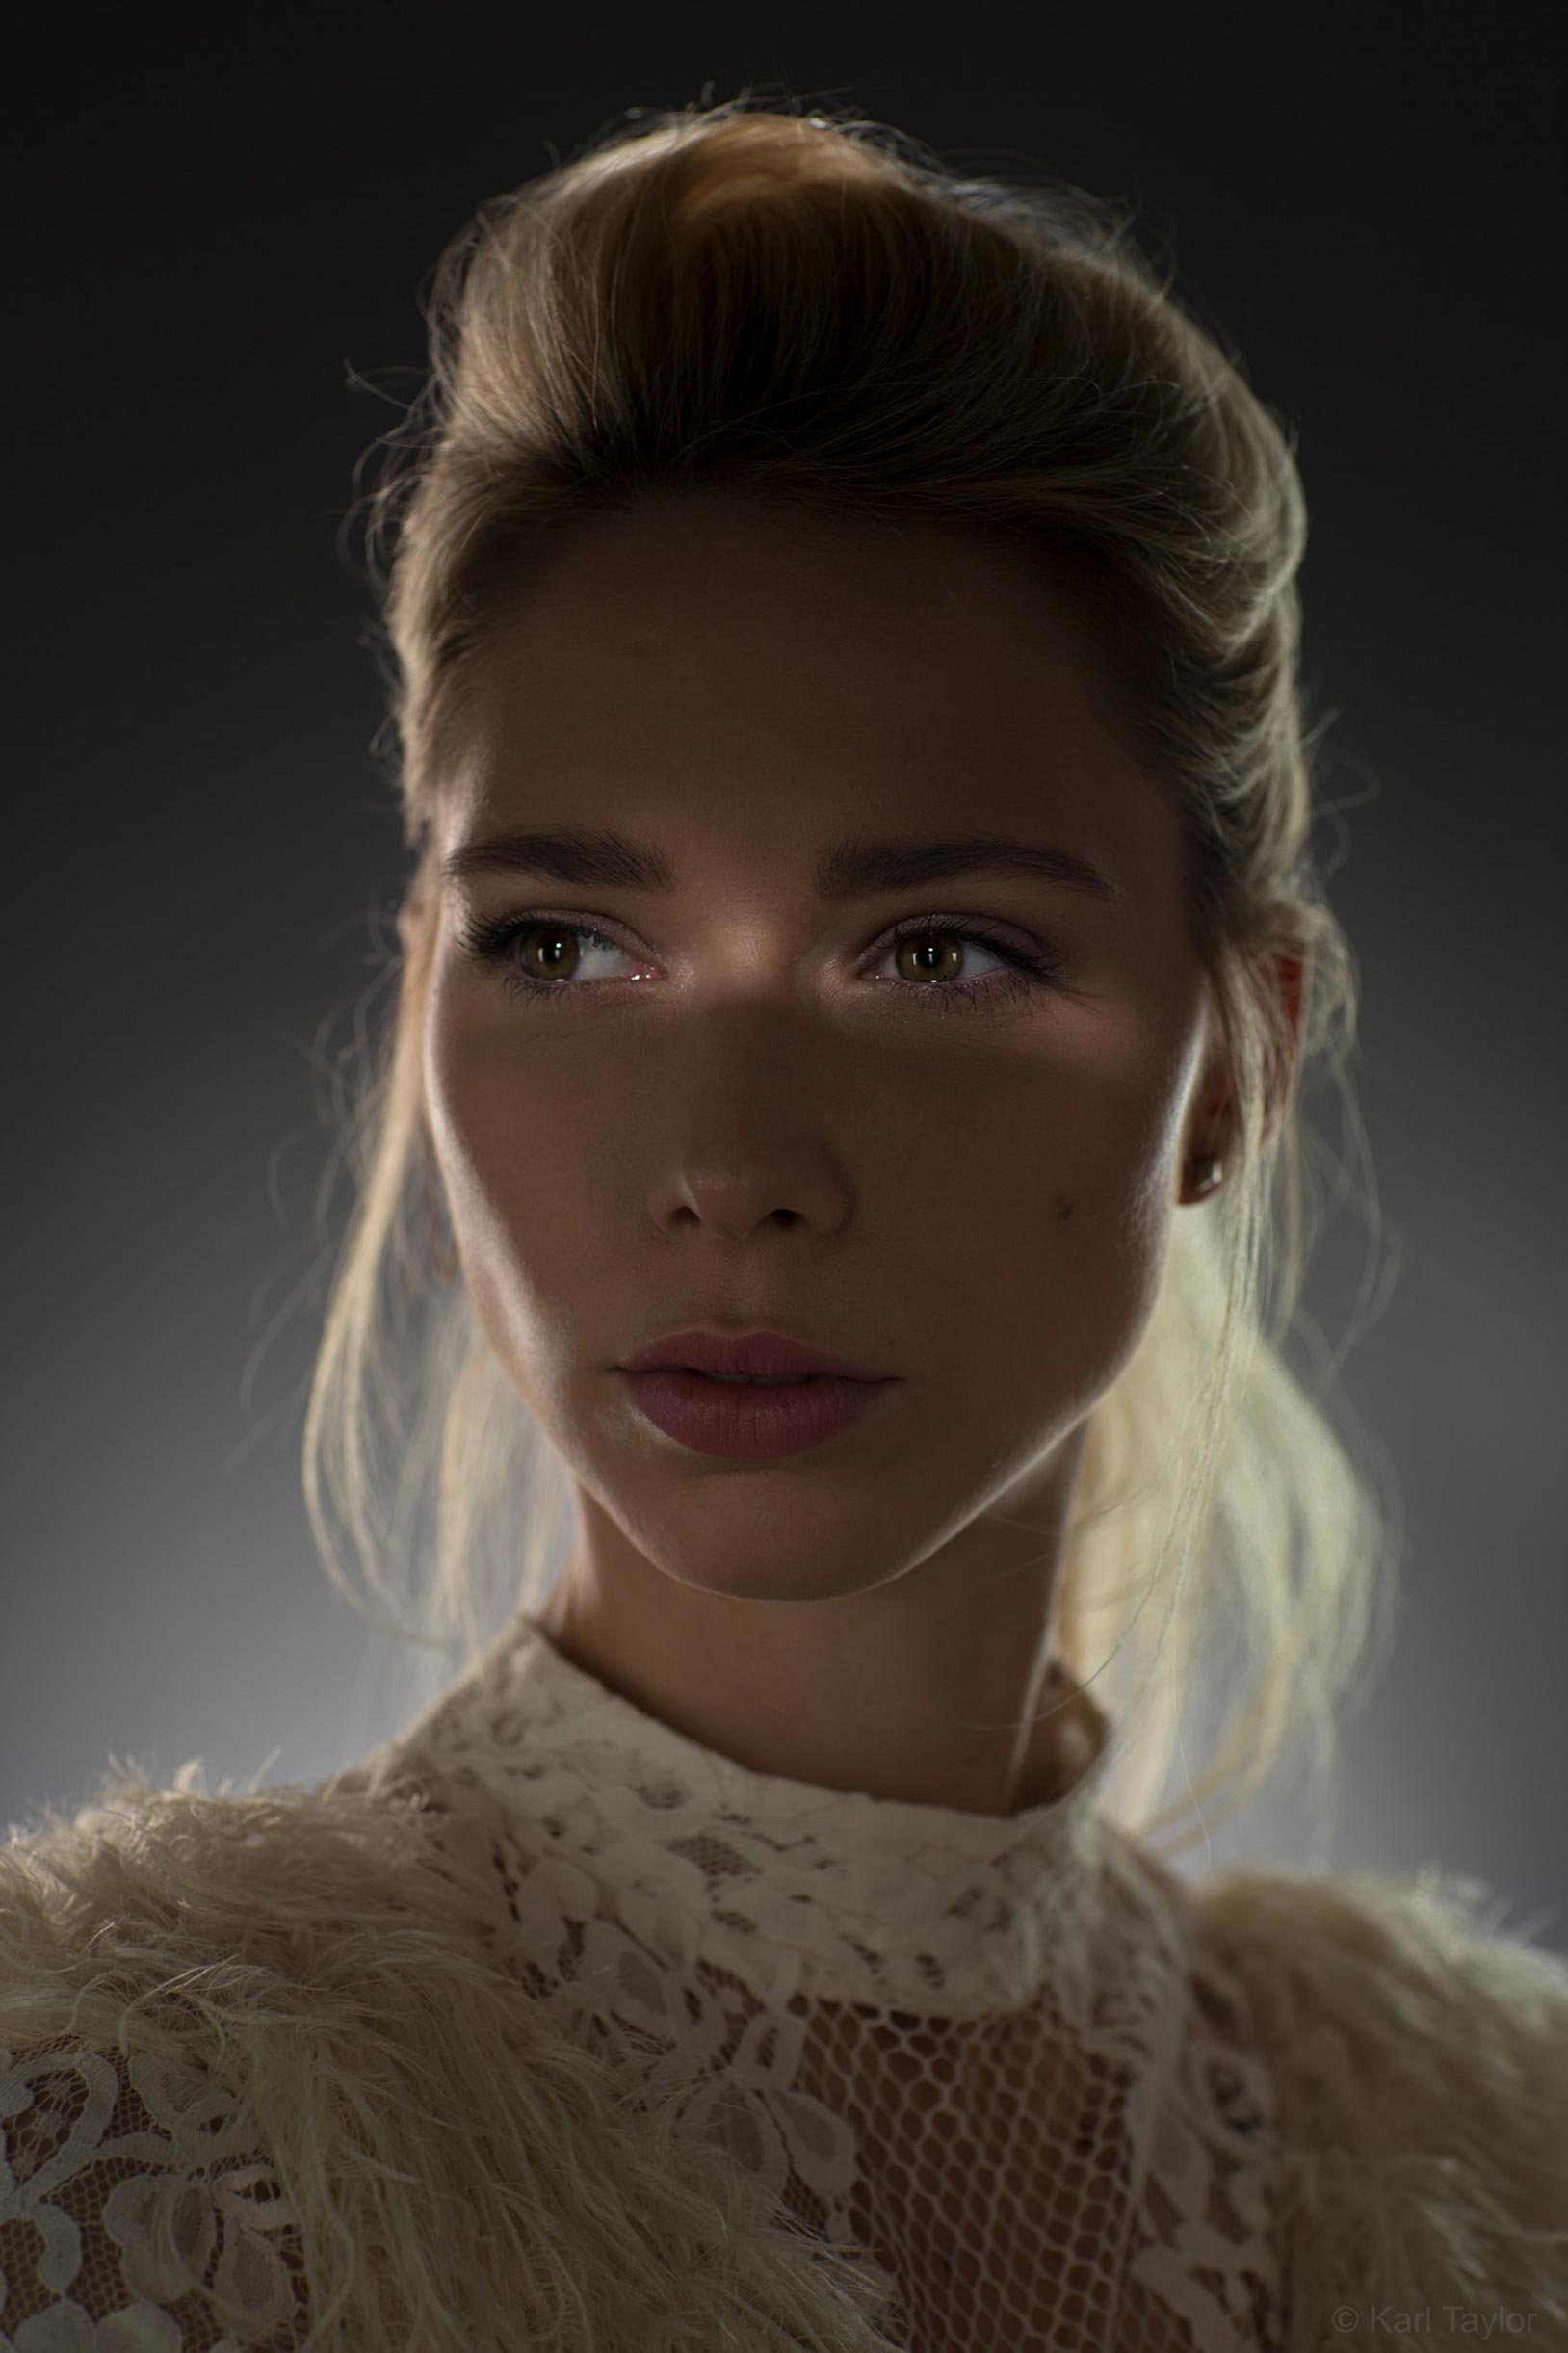 Portrait with rim lighting